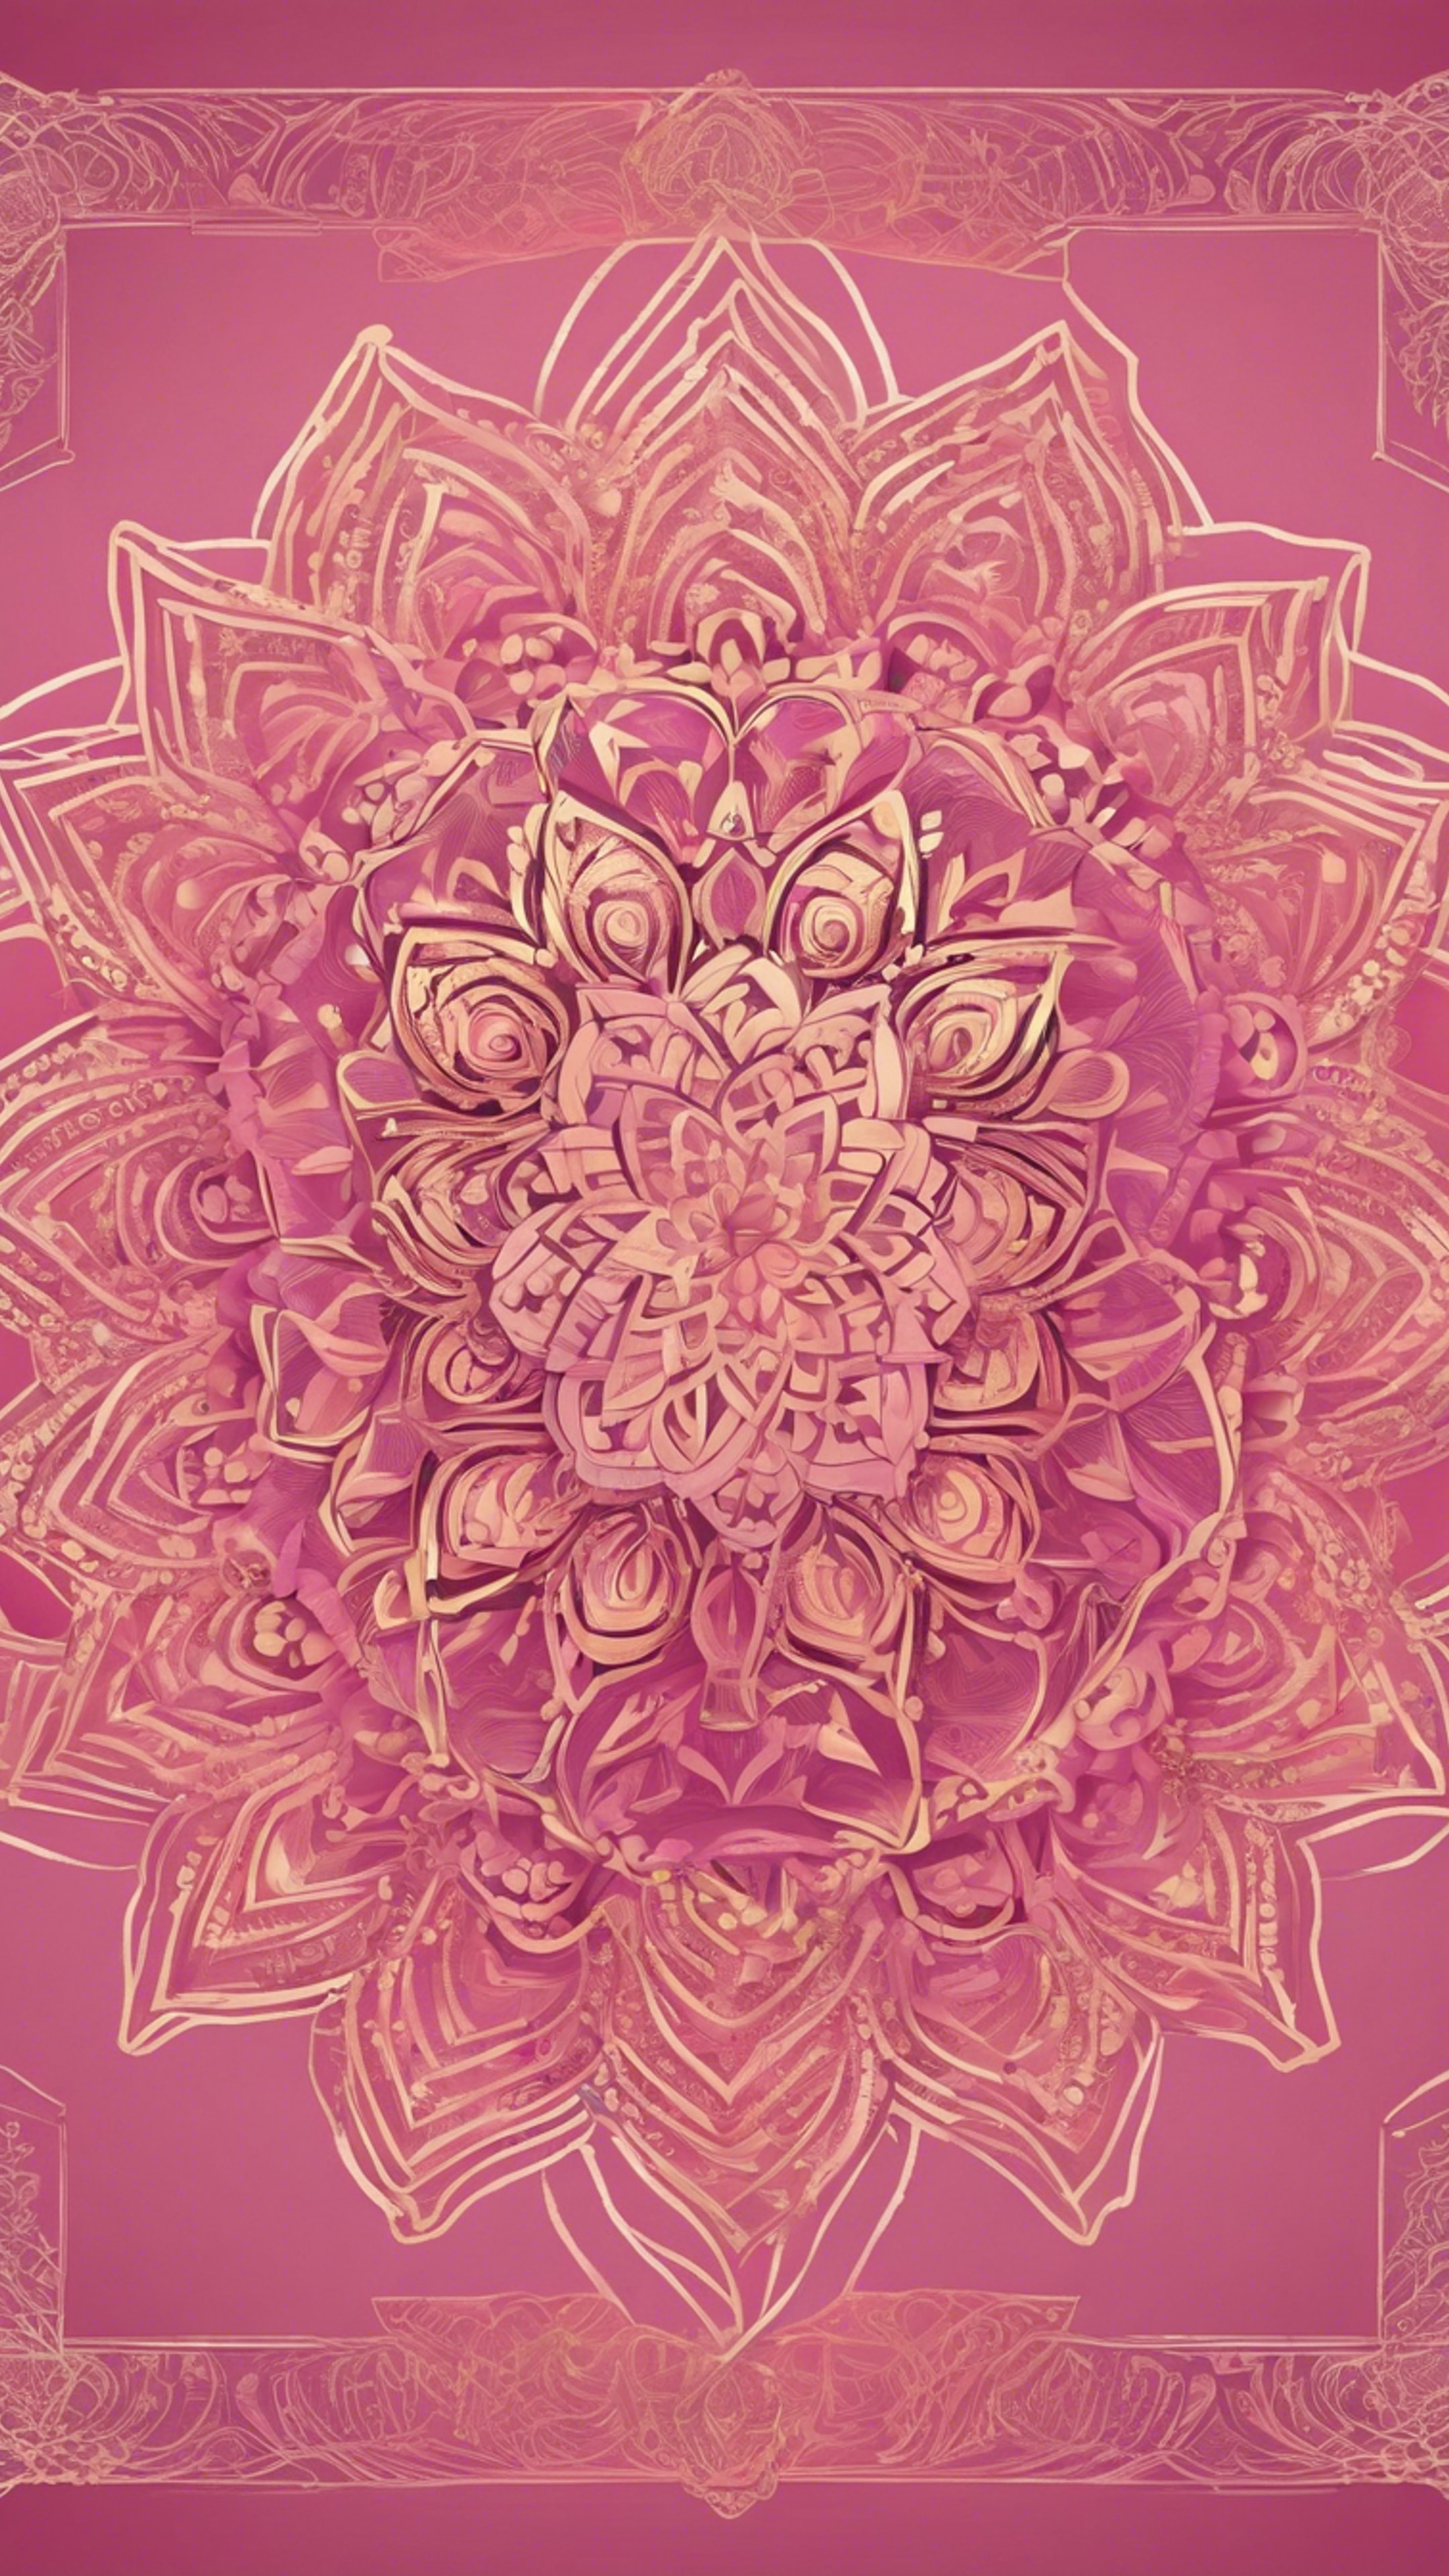 A pink and gold mandala design flourishing with intricate line art and vibrant colors. Fondo de pantalla[7f3fcd6ed997428c89d3]